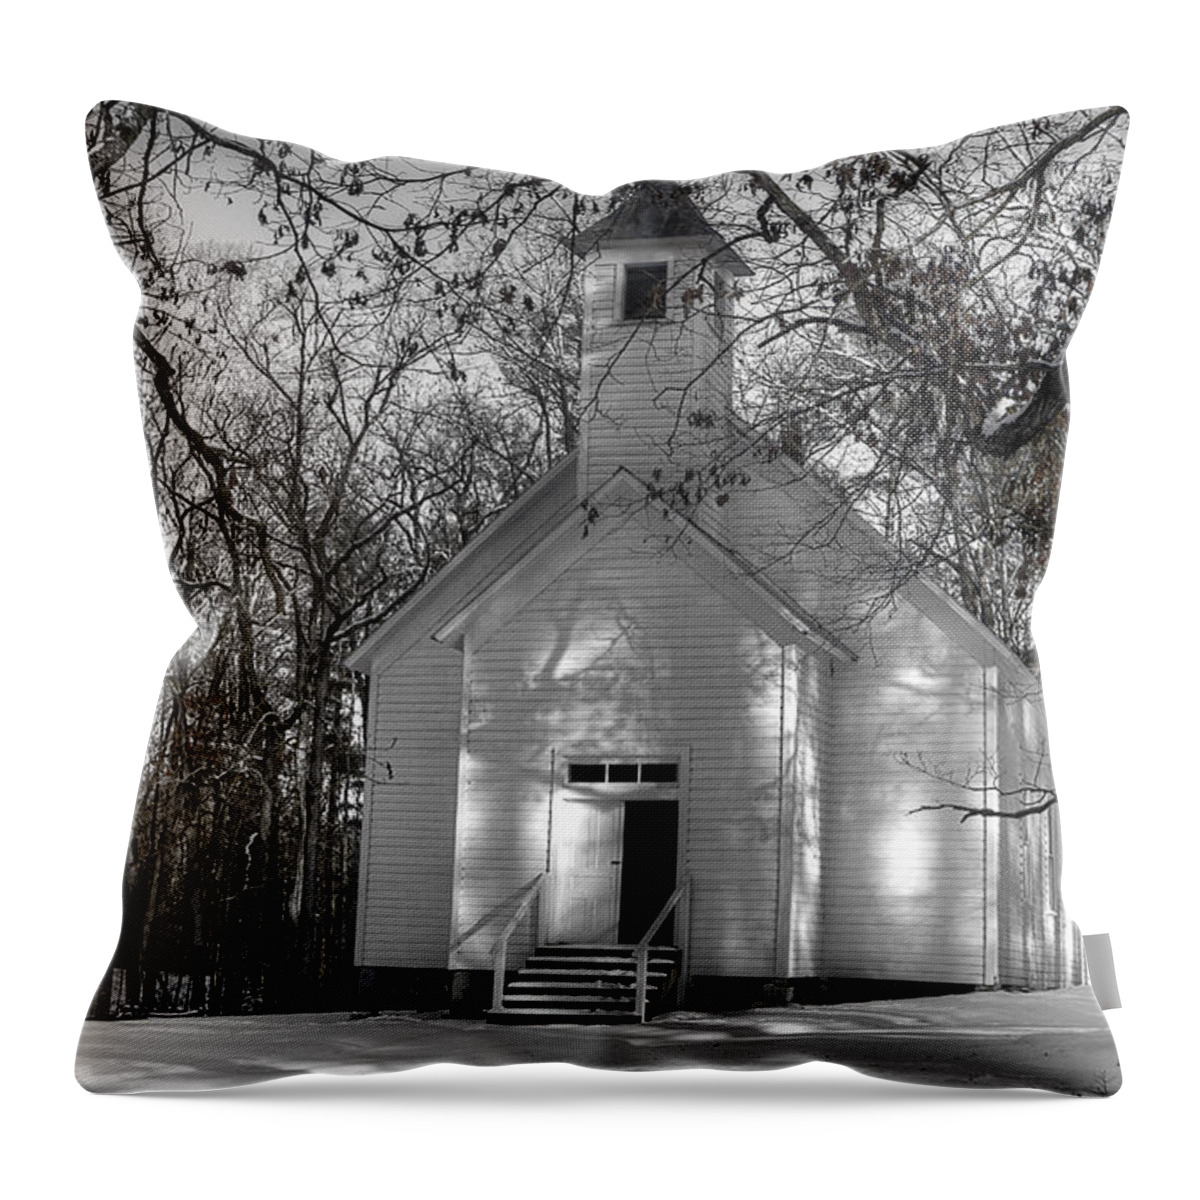 Cades Cove Church Throw Pillow featuring the photograph Church In The Cove by Michael Eingle